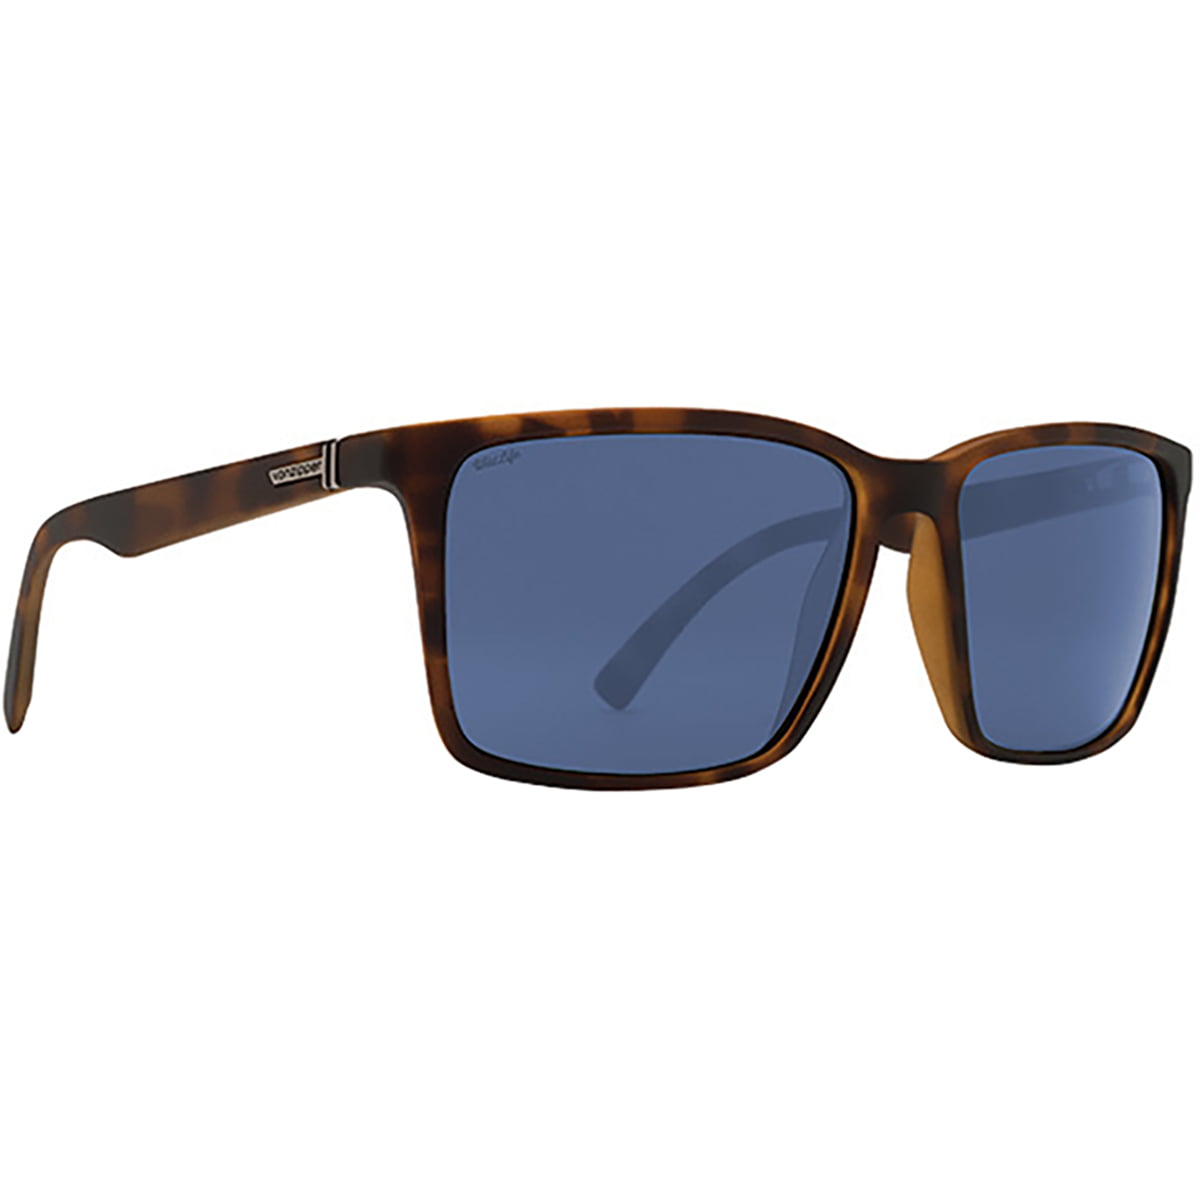 VonZipper - VonZipper Men's Lesmore Polarized Sunglasses,OS,Brown/Grey -  Walmart.com